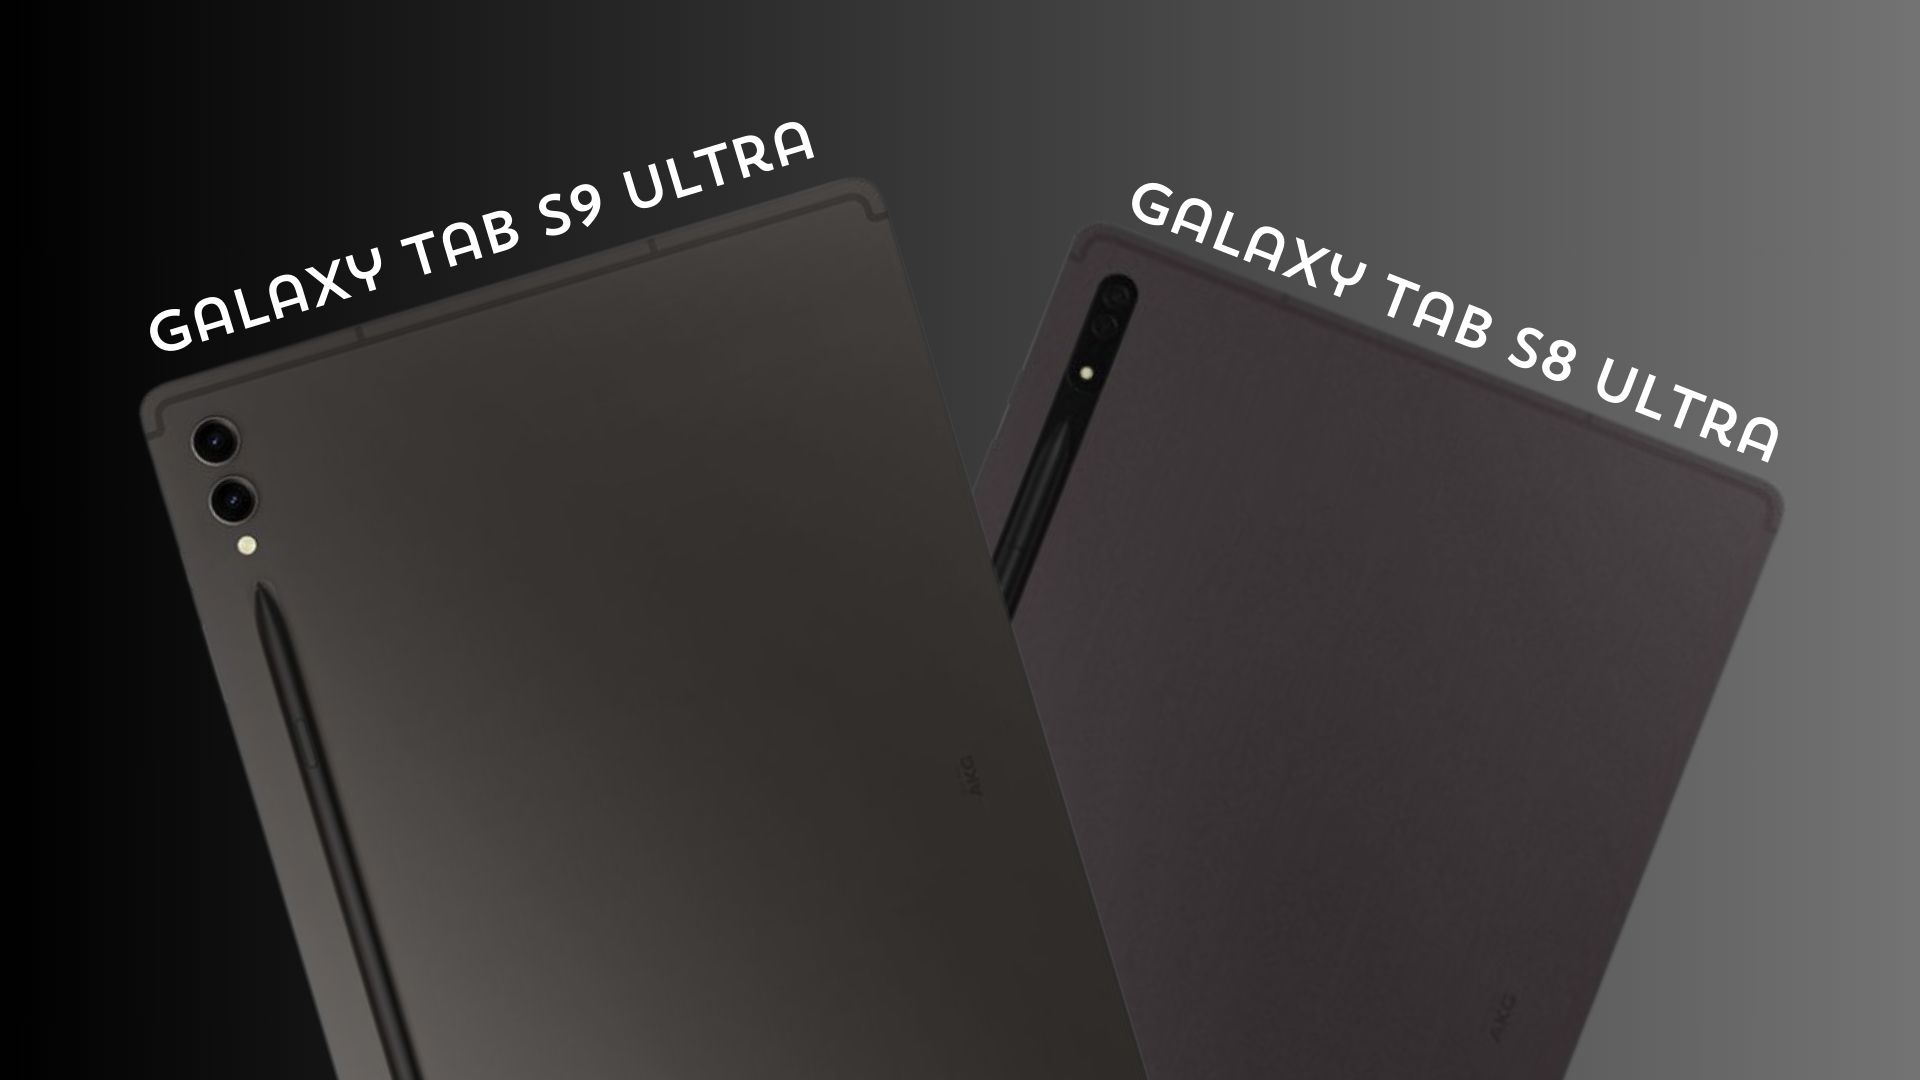 Samsung Galaxy Tab S9 Ultra vs. Galaxy Tab S8 Ultra